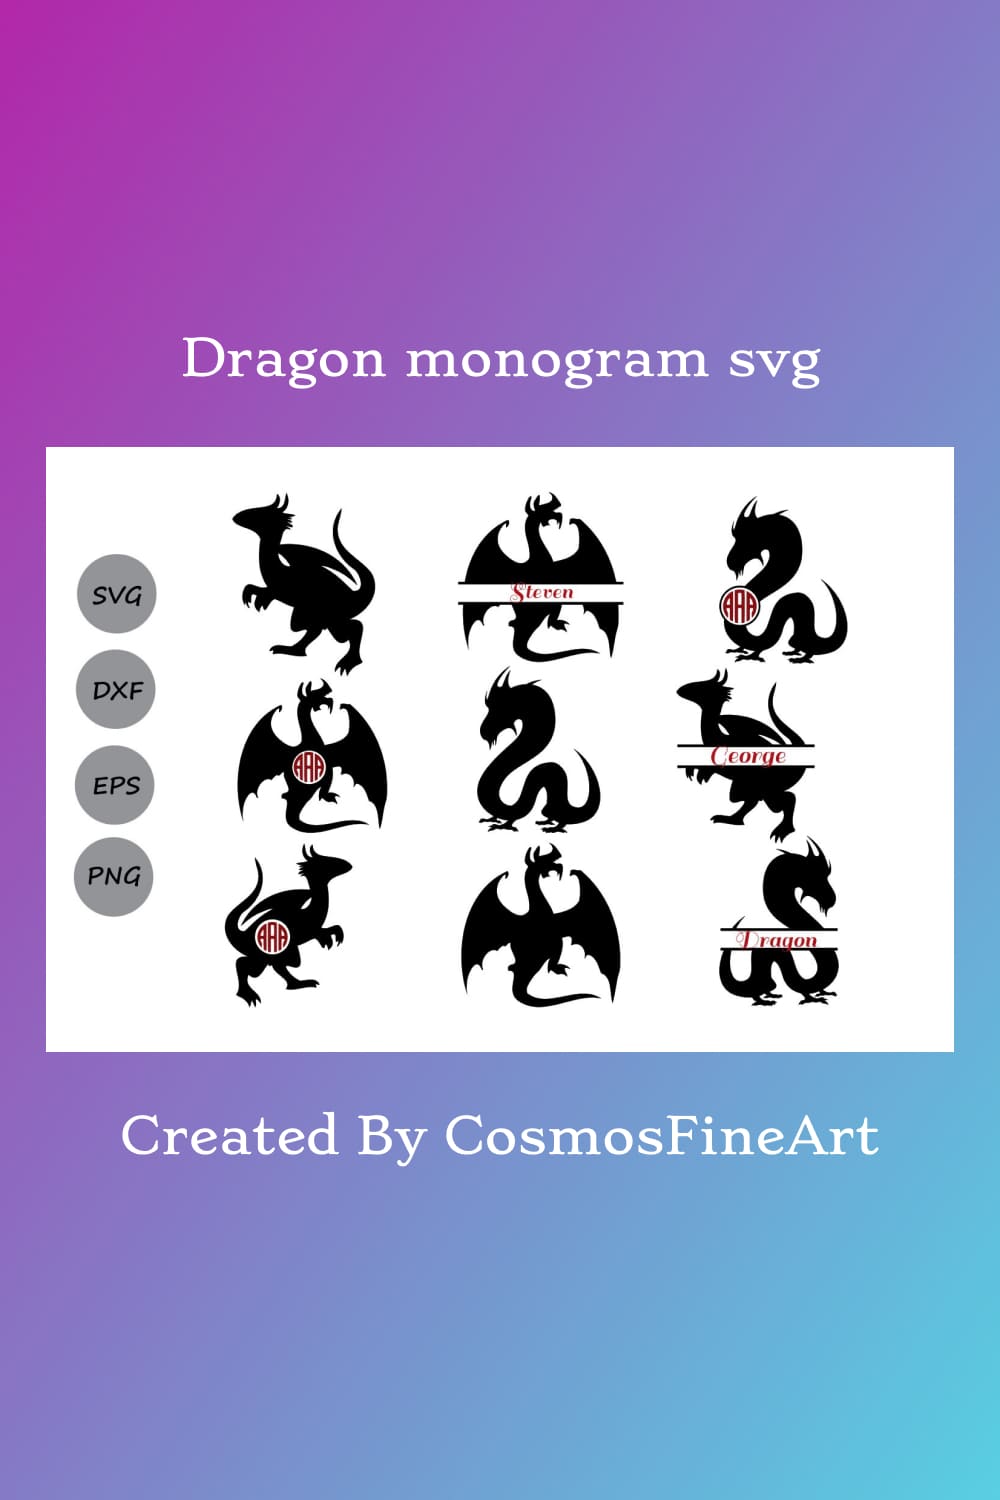 dragon svg dragon monogram svg dragon clipart pinterest image.